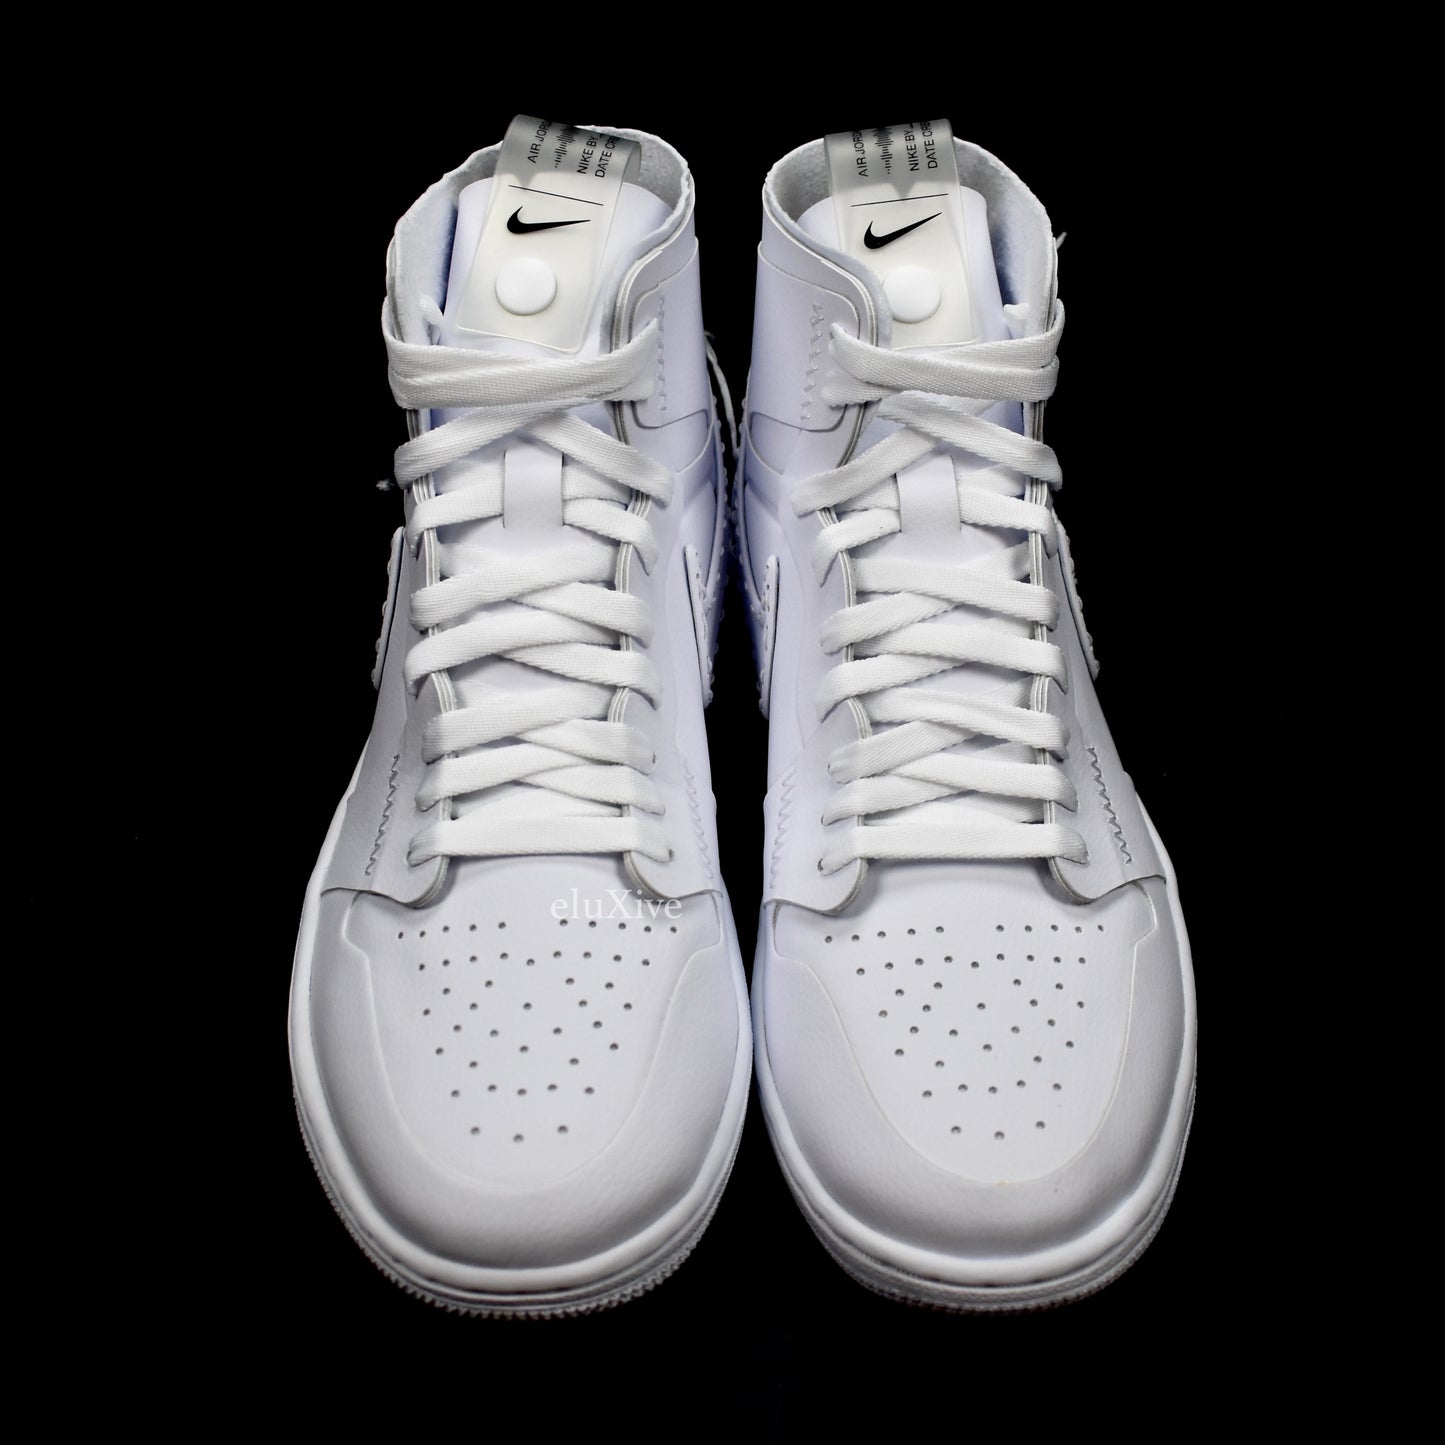 Nike - Air Jordan 1 Retro Hi NCXL 'Noise Cancelling Pack'